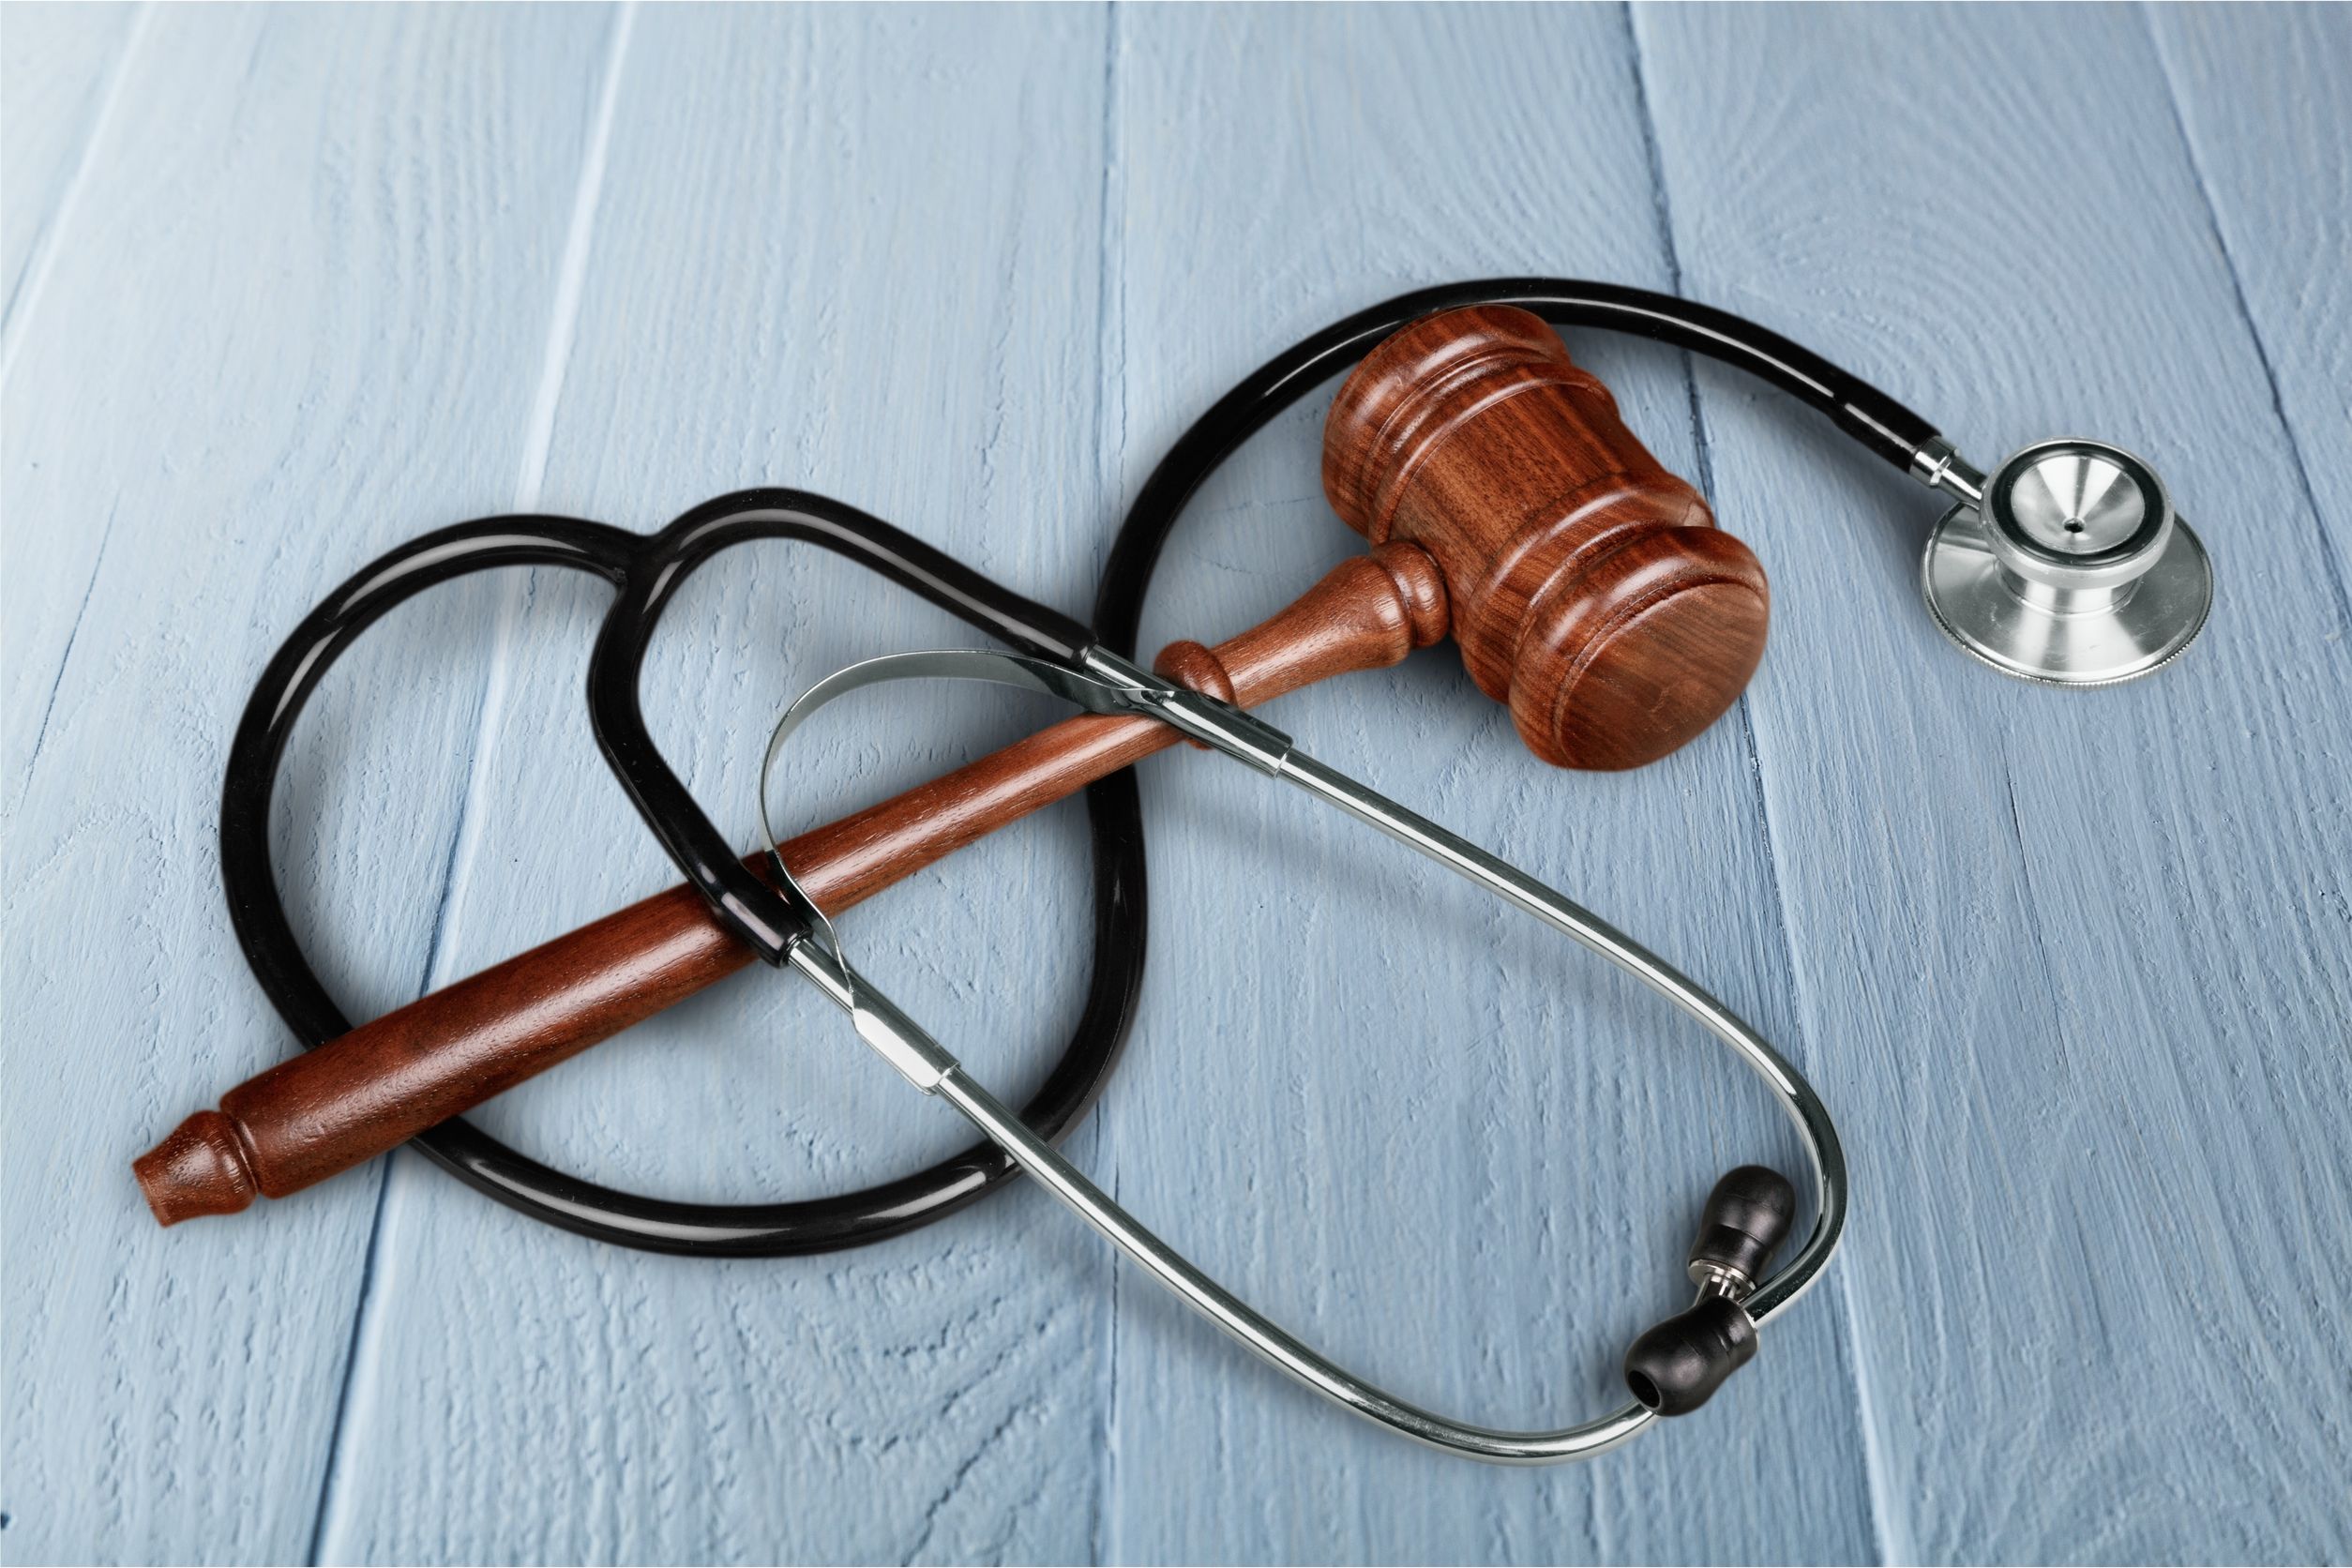 Chattanooga Medical Malpractice Victims Should Pursue Compensation